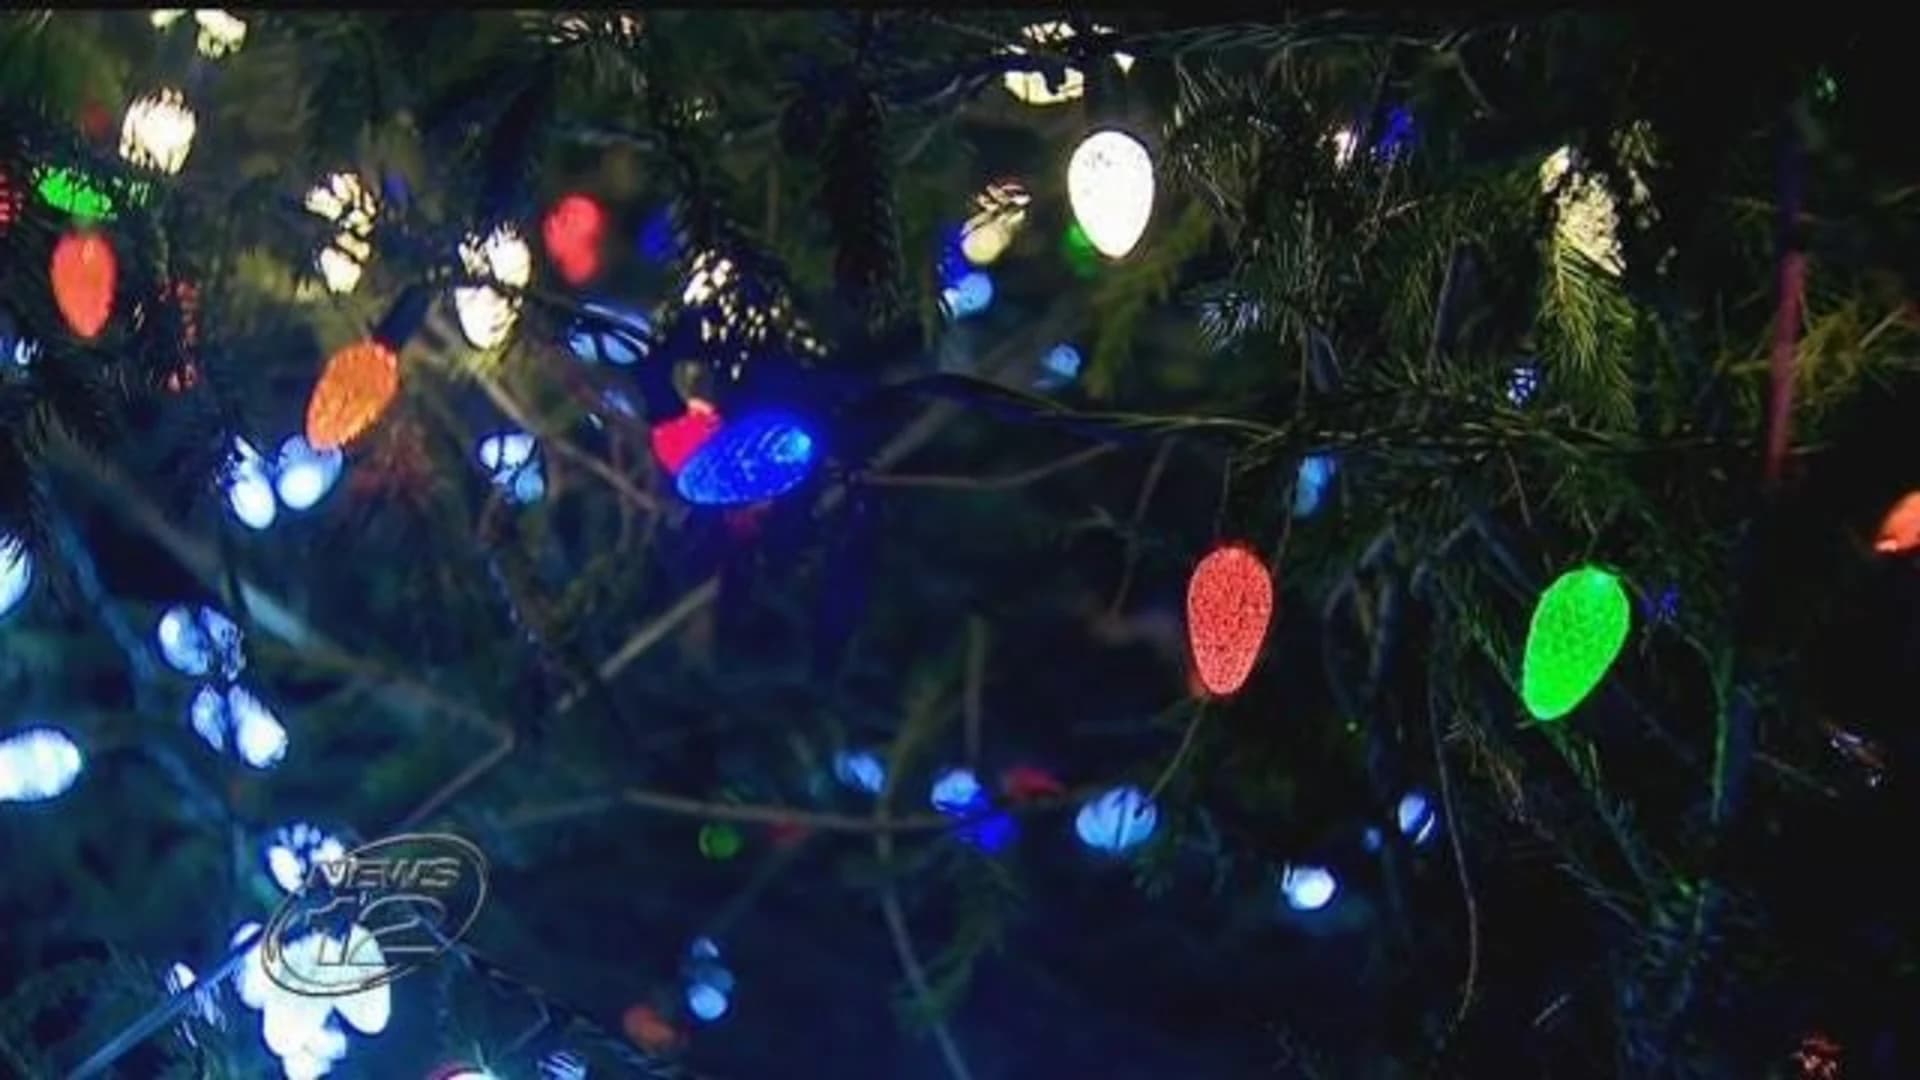 Sea Girt holds annual tree lighting despite vandalism